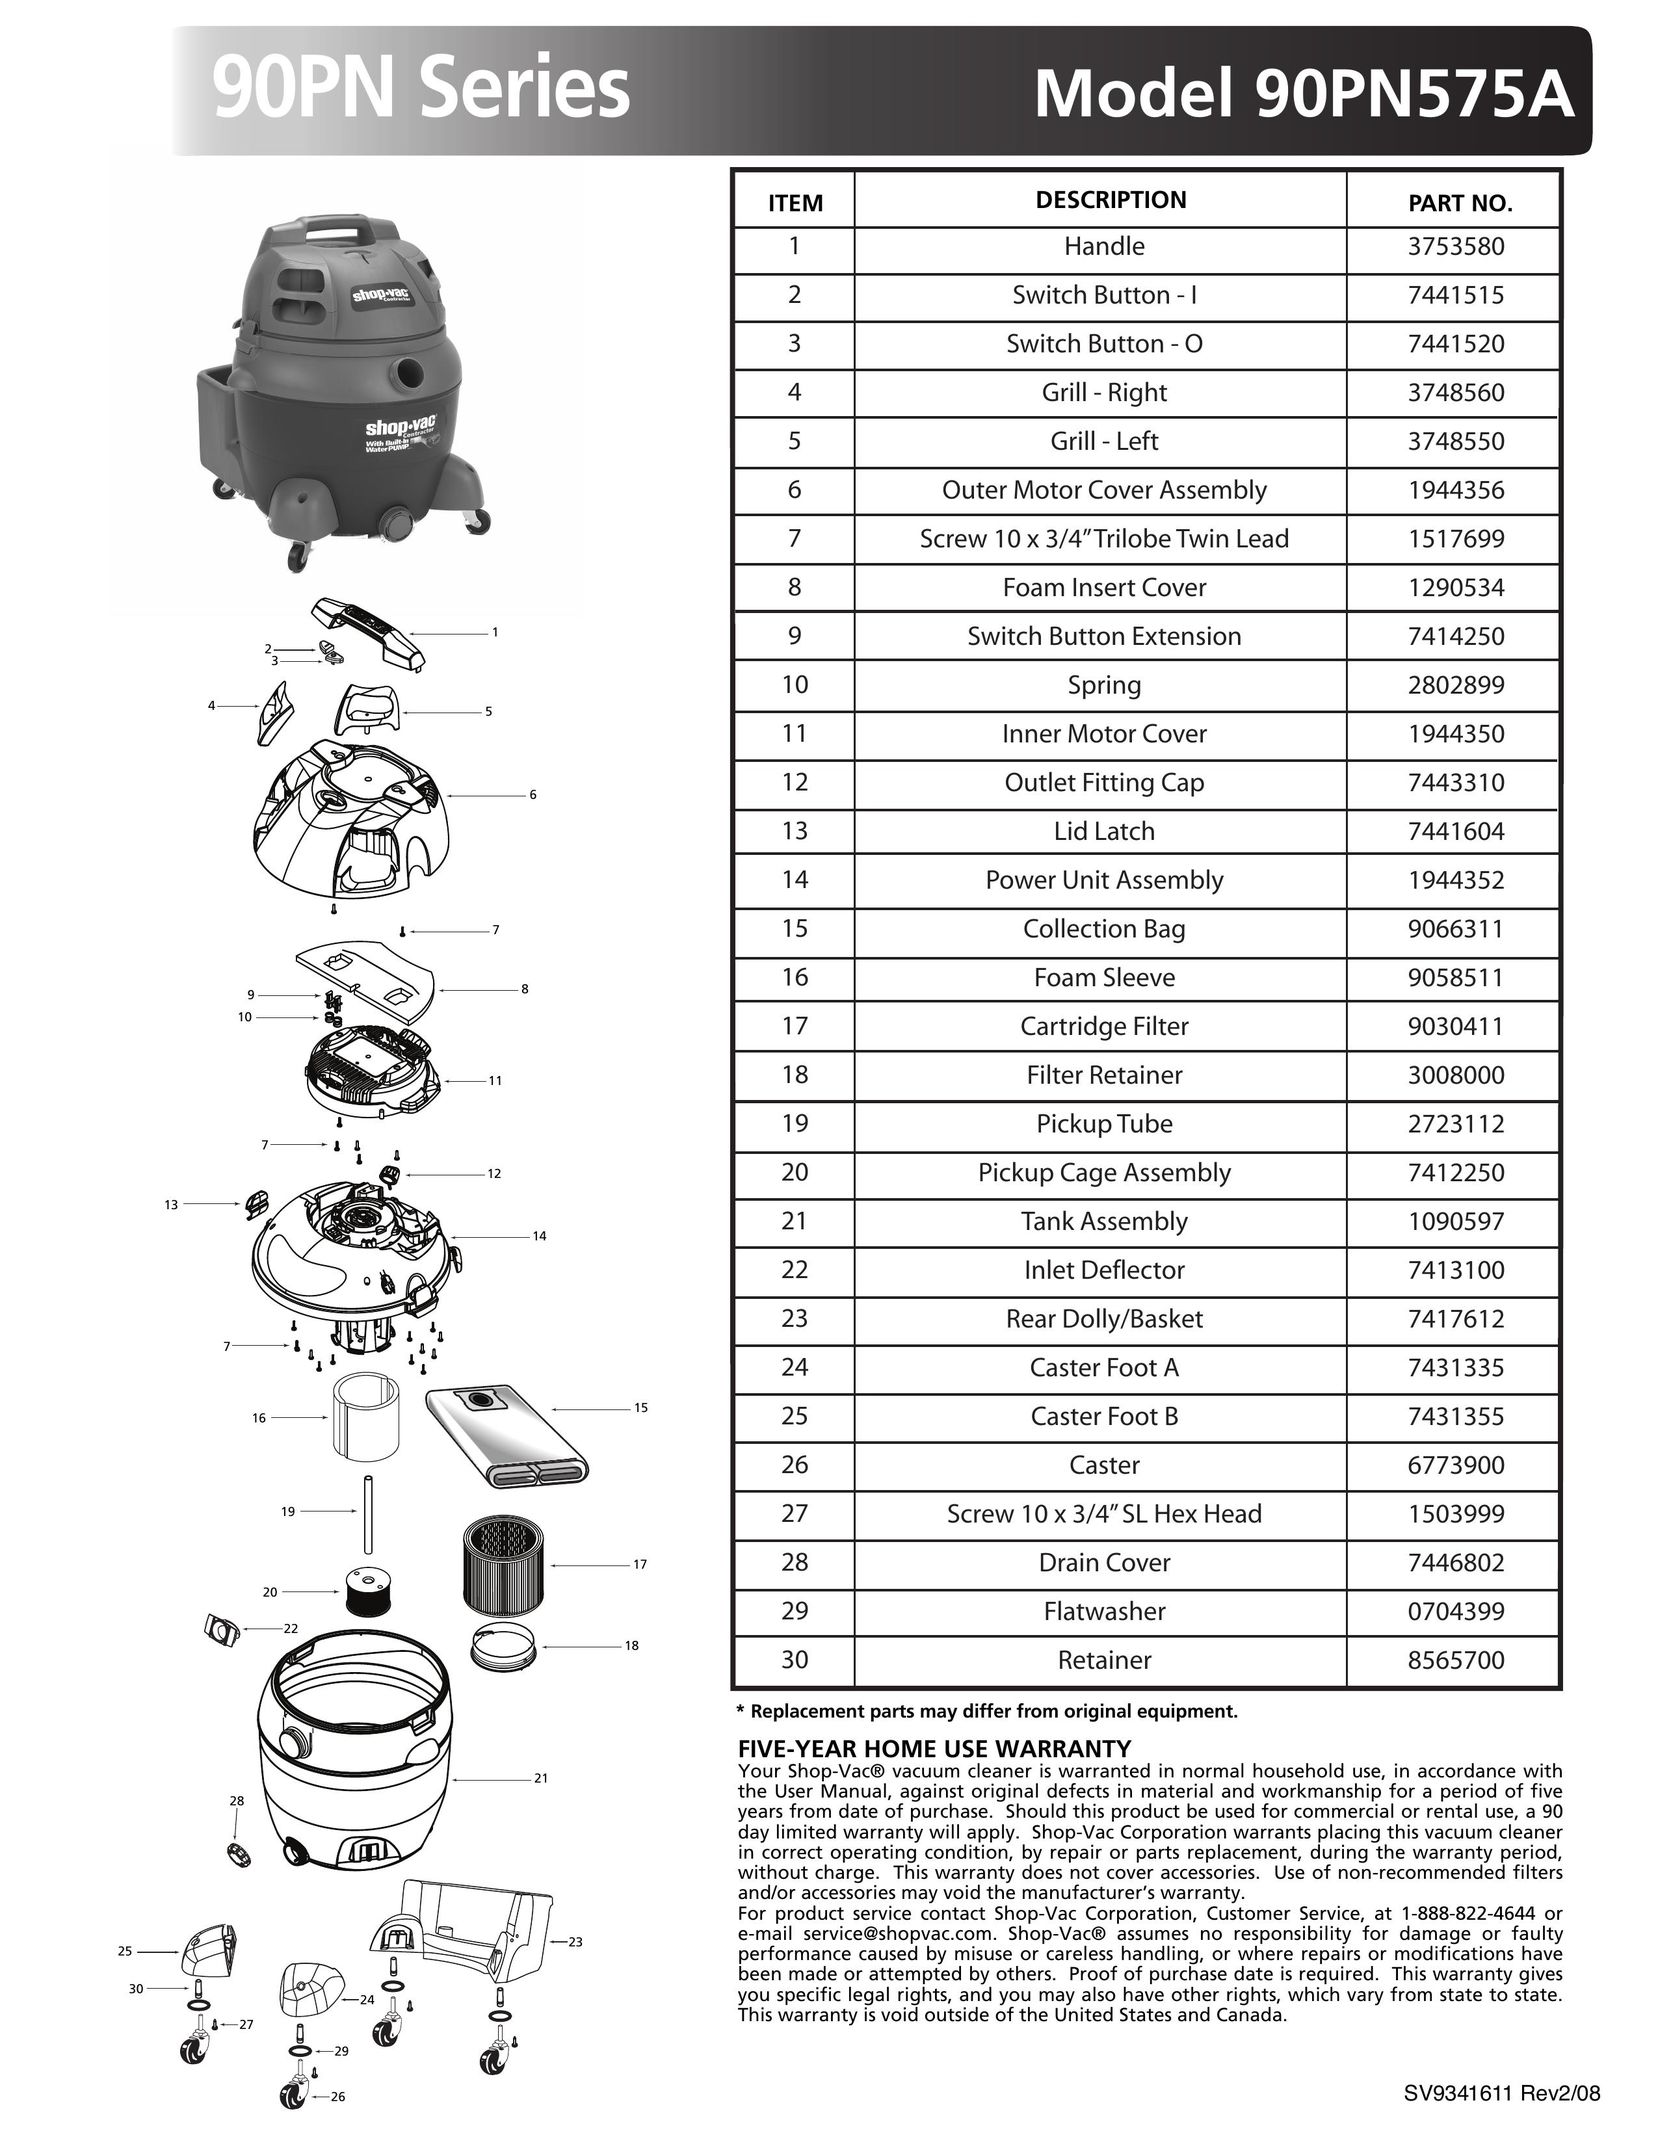 Shop-Vac 90PN575A Vacuum Cleaner User Manual